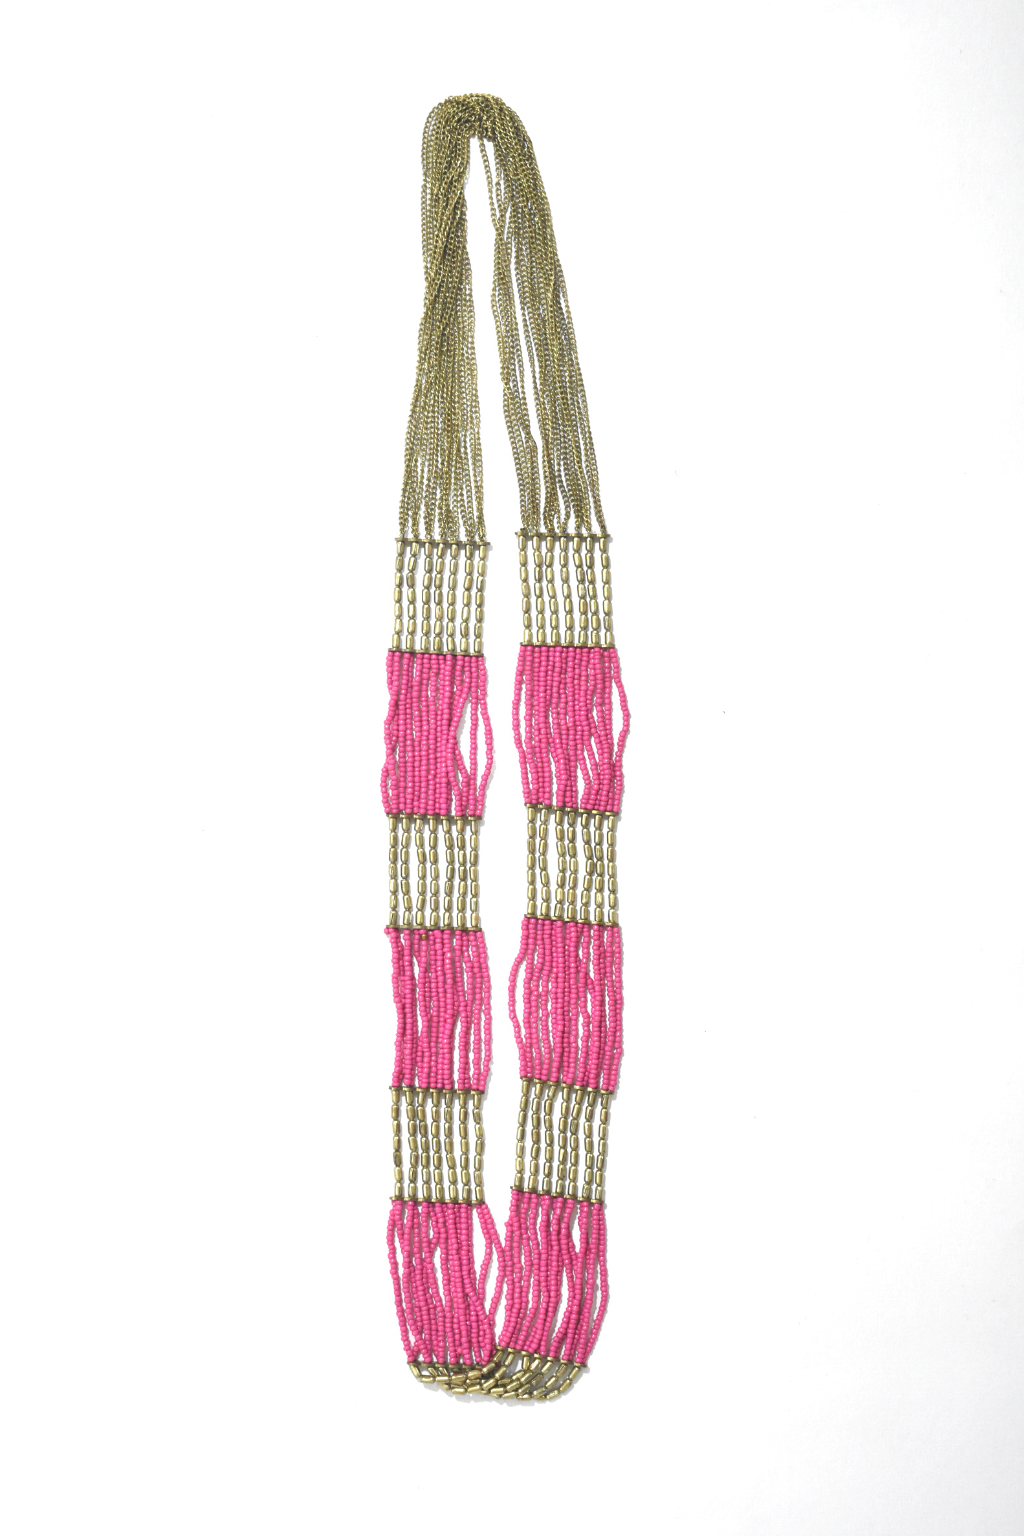 Vintage Pink Japanese Glass Beads, Necklace | Beadparadise.com